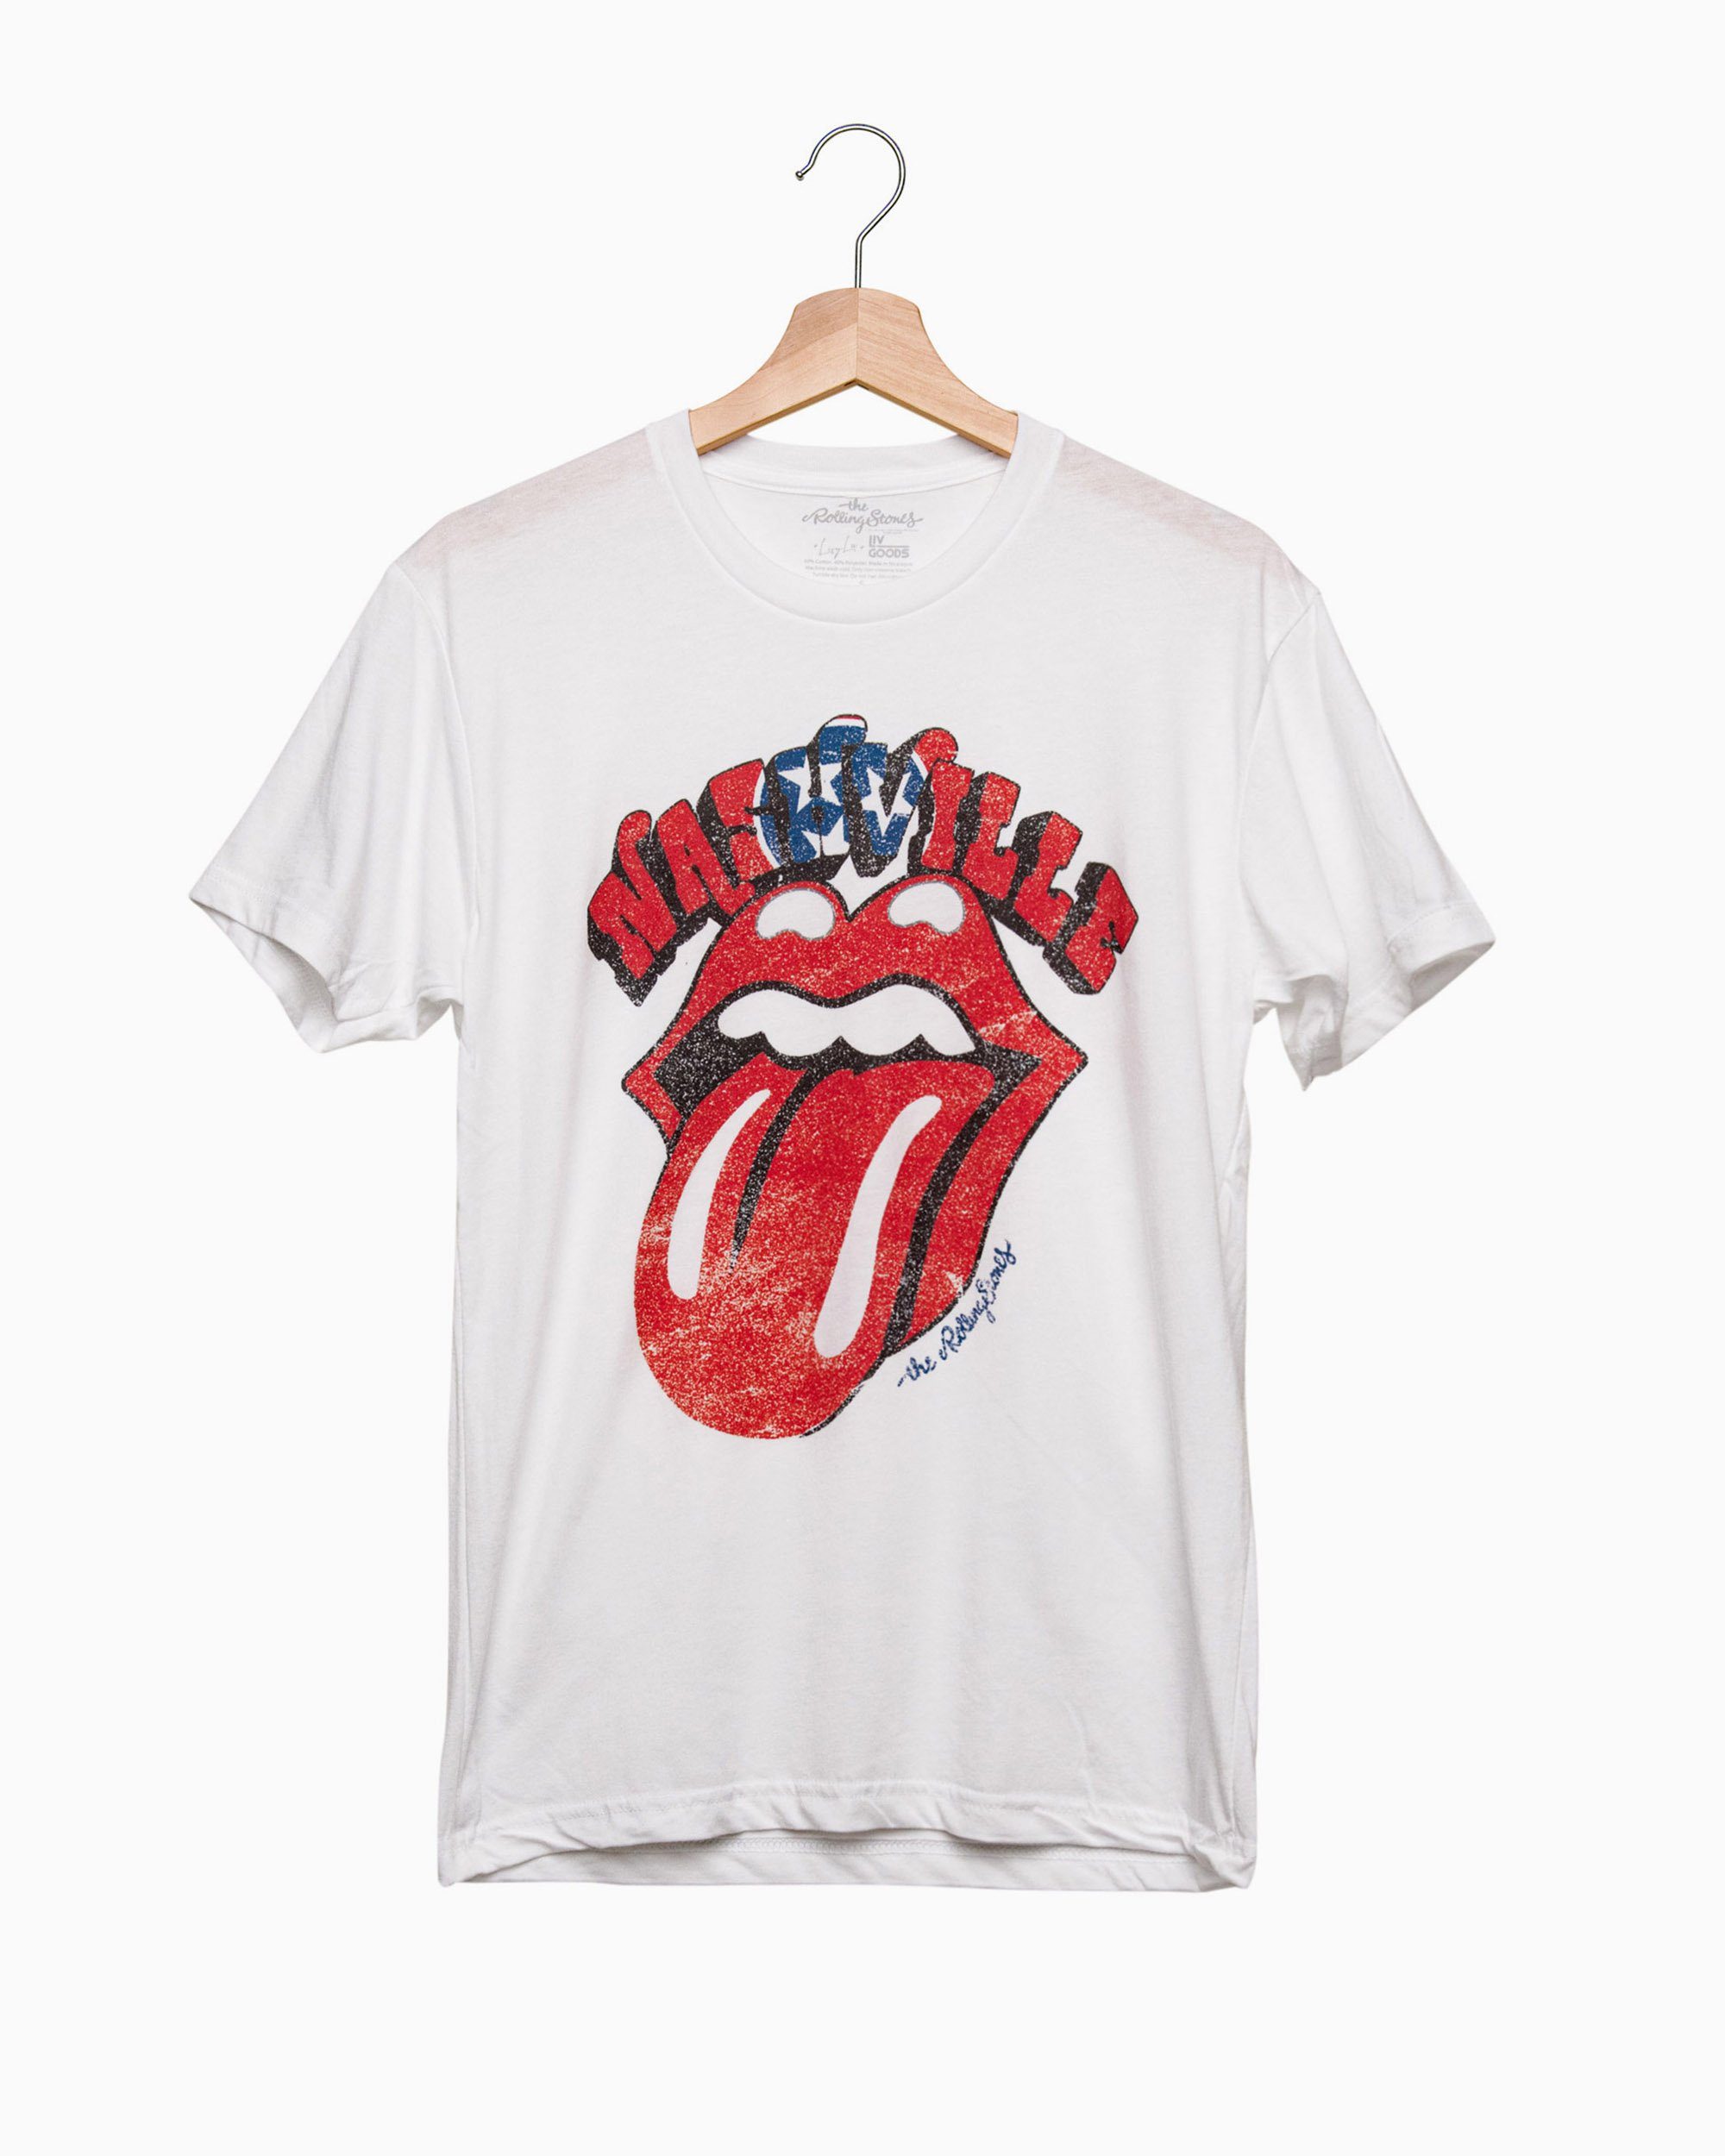 Rolling Stones Nashville Flag Rocker White Tee - shoplivylu